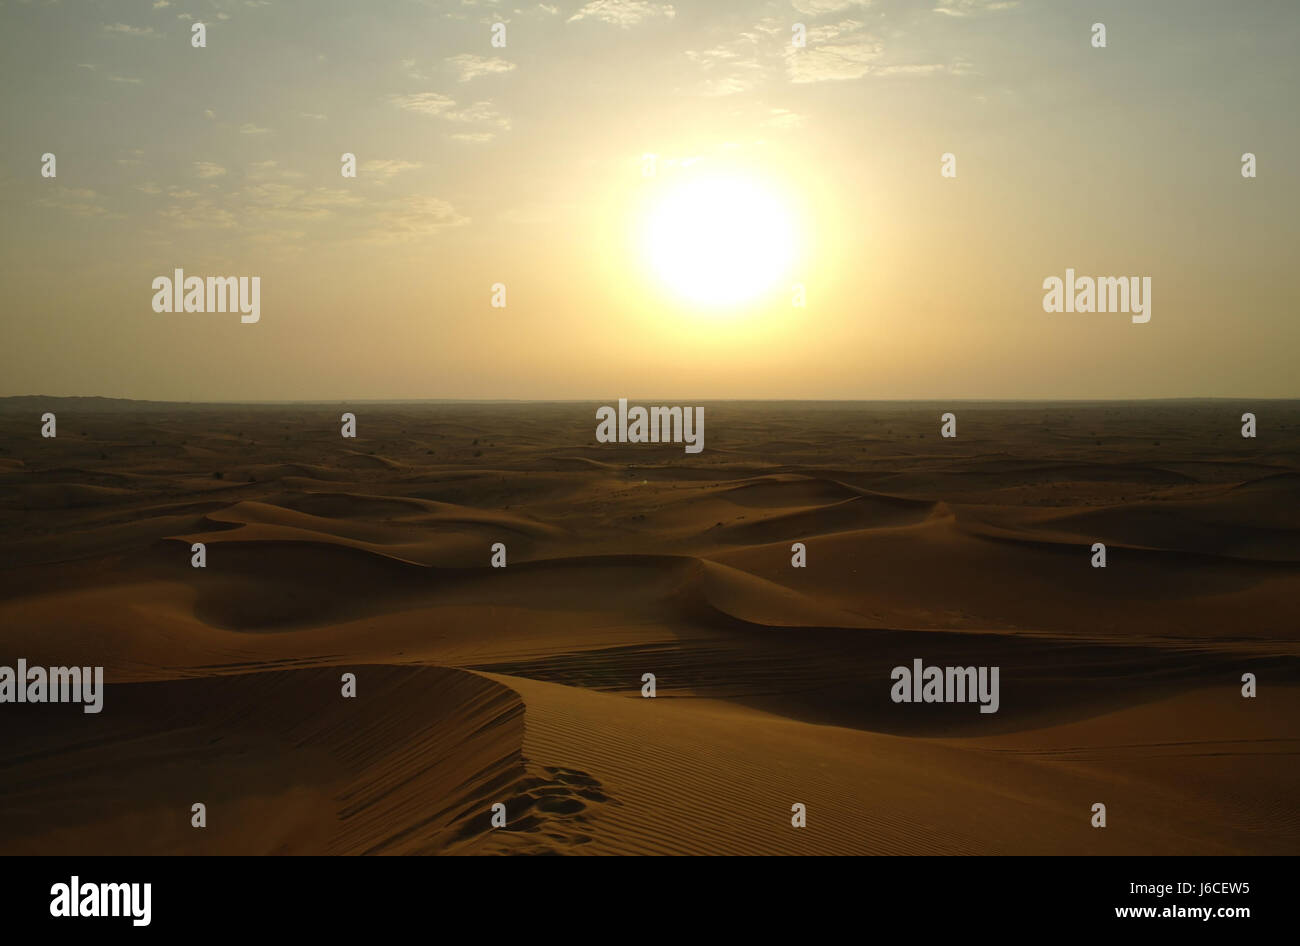 Sunset view over orange desert sand dunes expanse to level, wide horizon, Alpha Tours Desert Safari, Dubai, United Arab Emirates Stock Photo